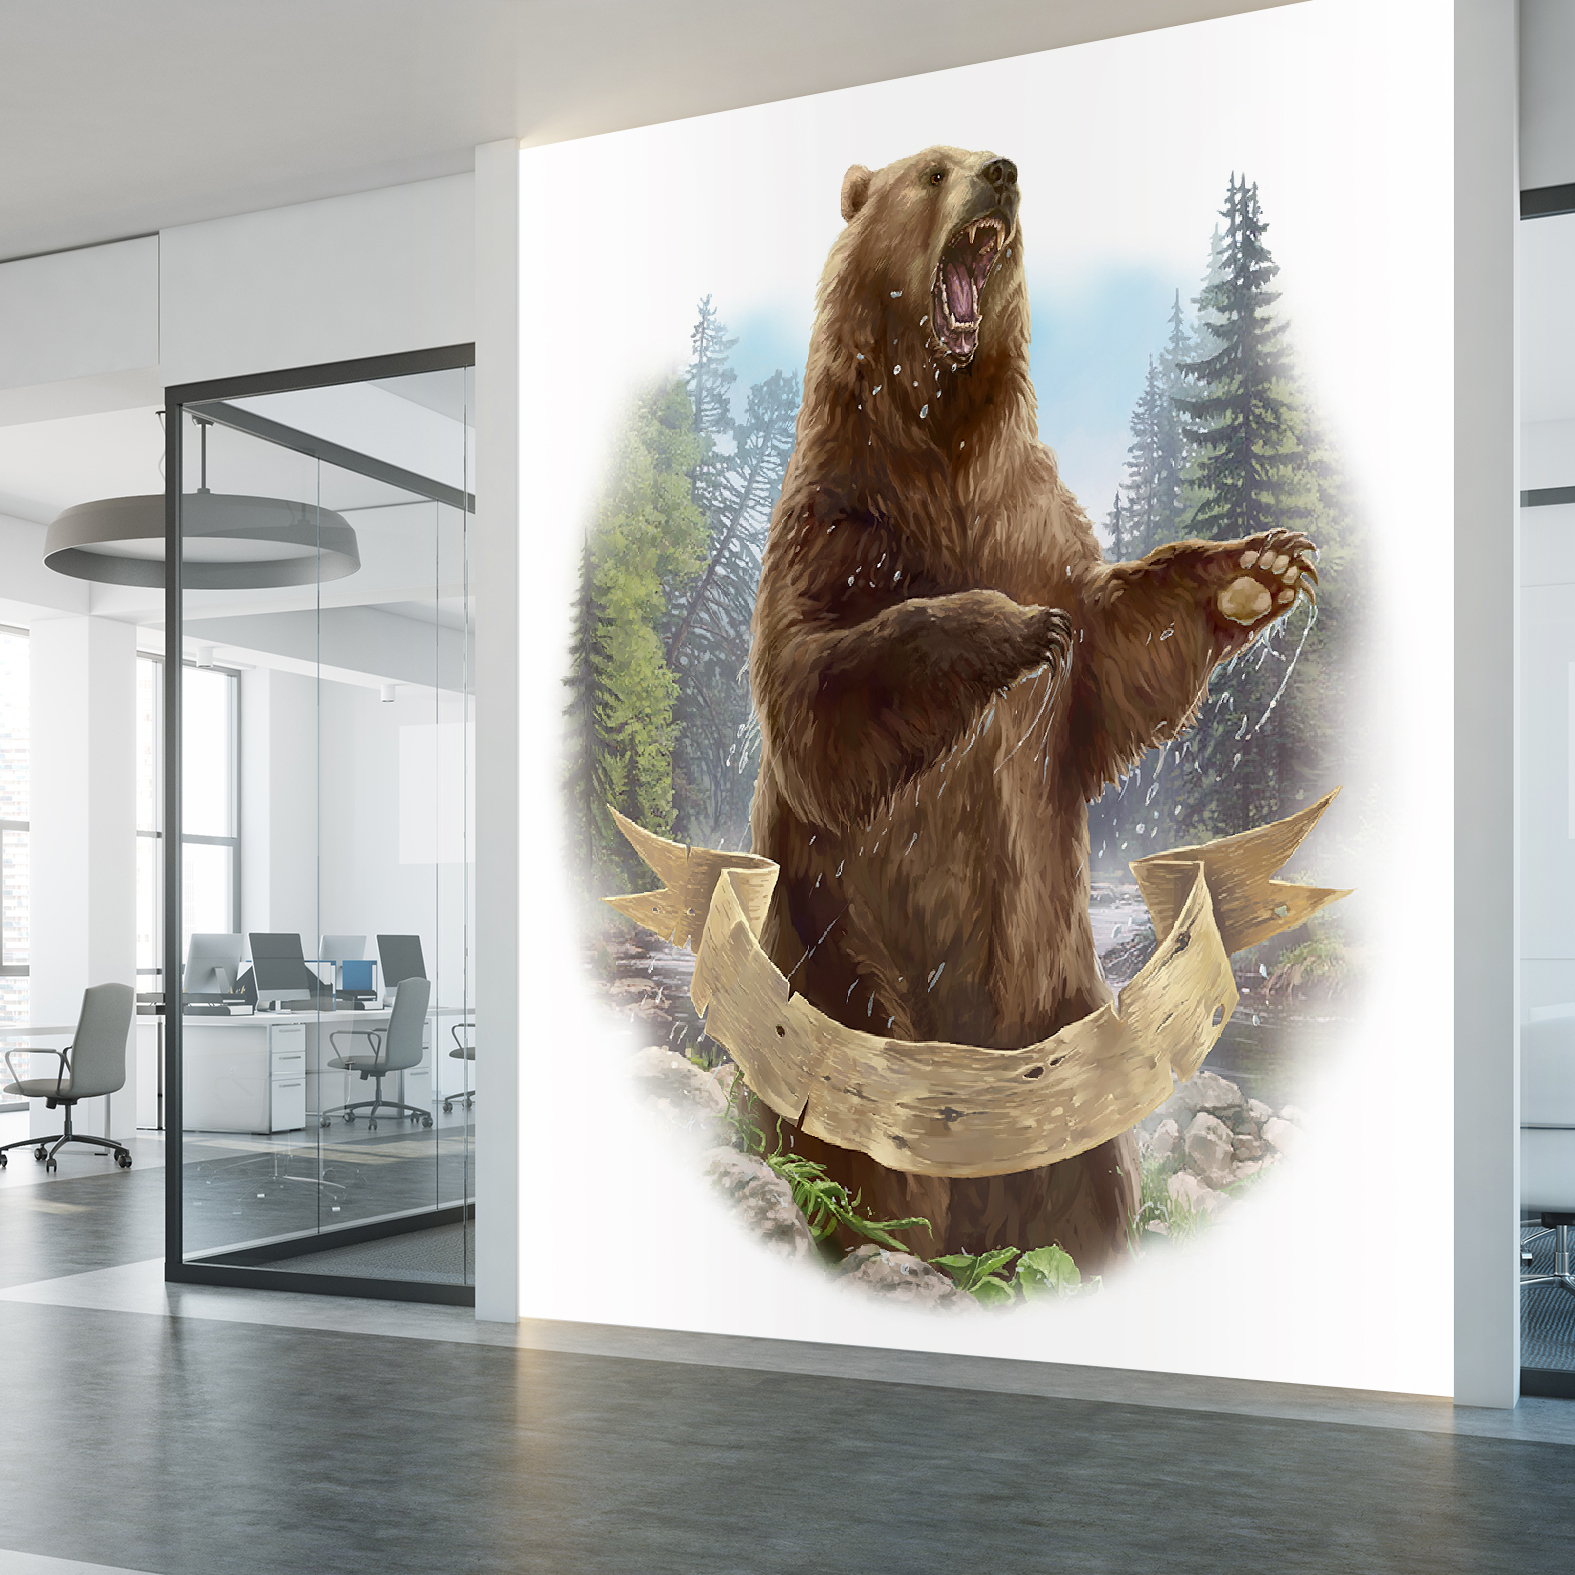 Фотообои Photostena Русский медведь 2,54 x 2,6 м сахар песок русский гост 1 килограмм